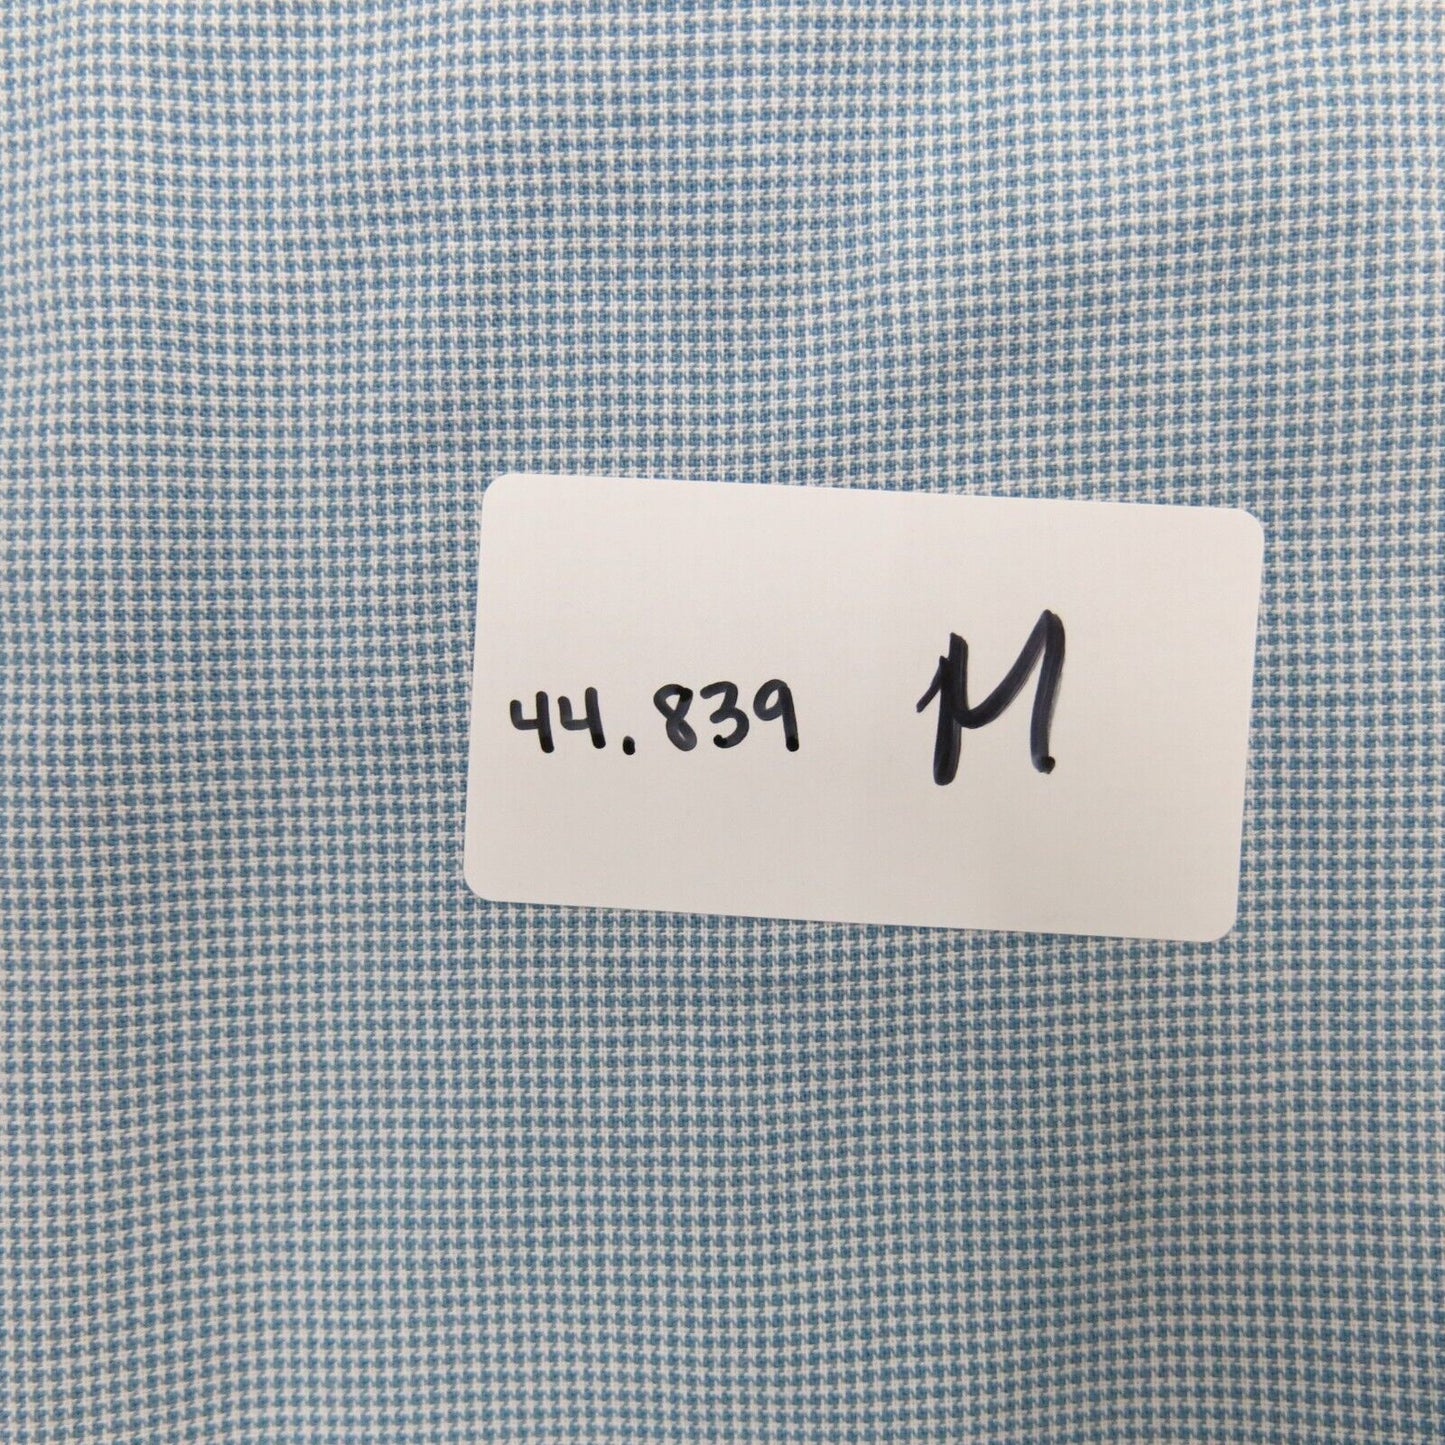 Wrangler Mens Button Up Shirt Houndstooth Short Sleeves 100% Cotton Blue SZ XL